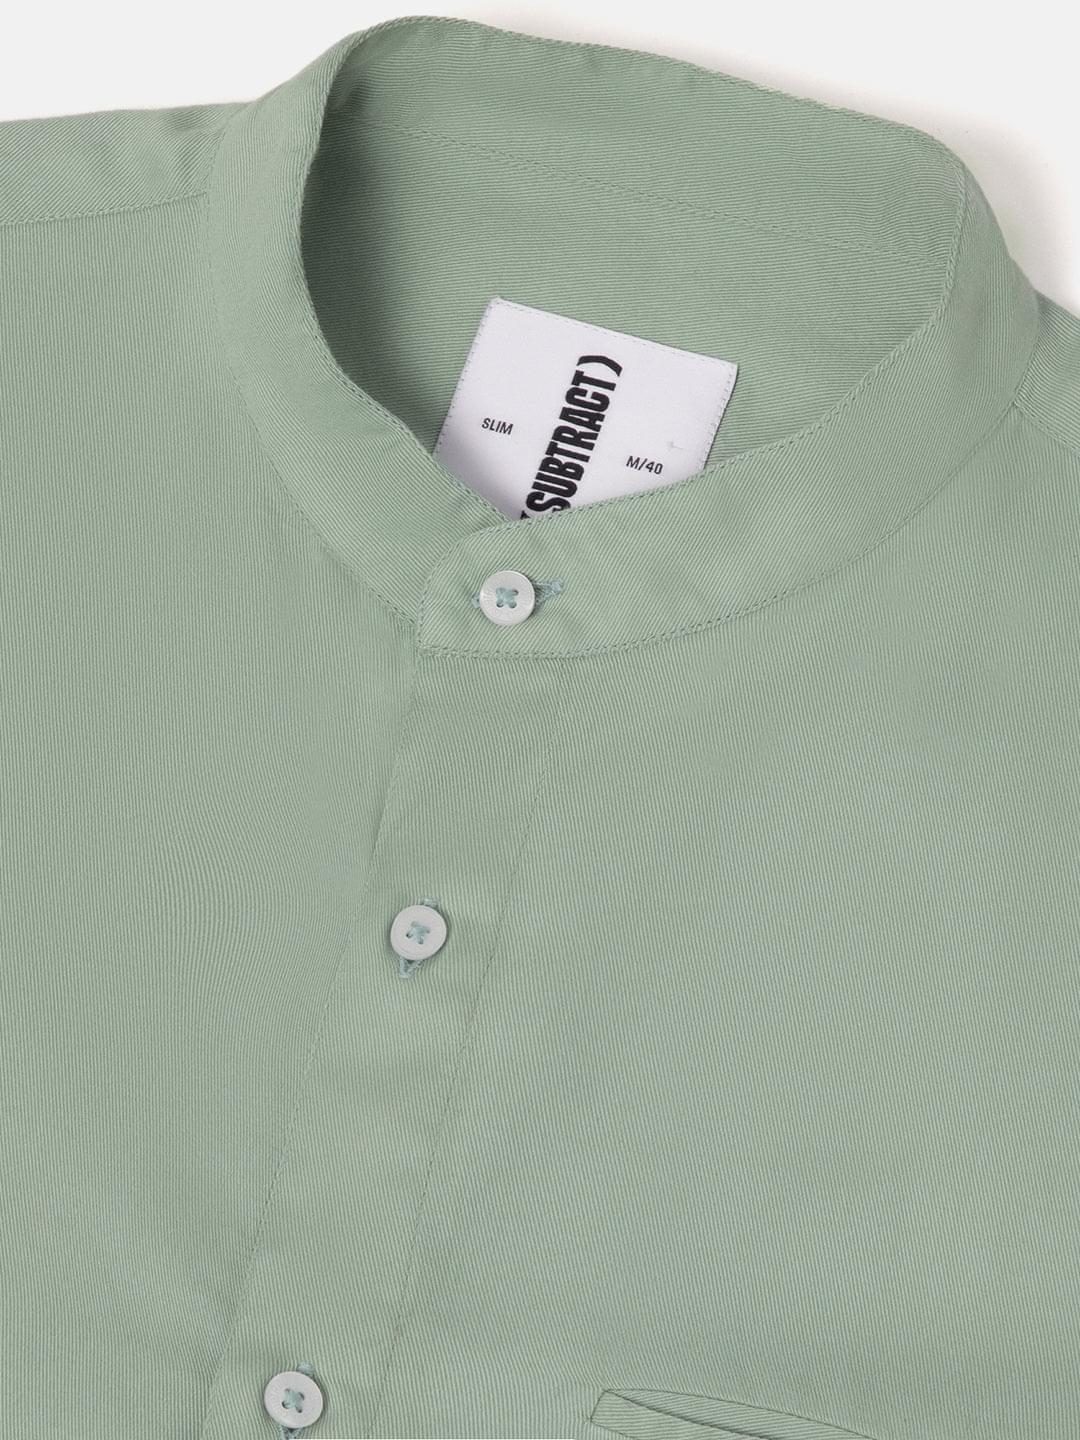 Cotton Tencel Shirt in Mint Green- Slim Fit